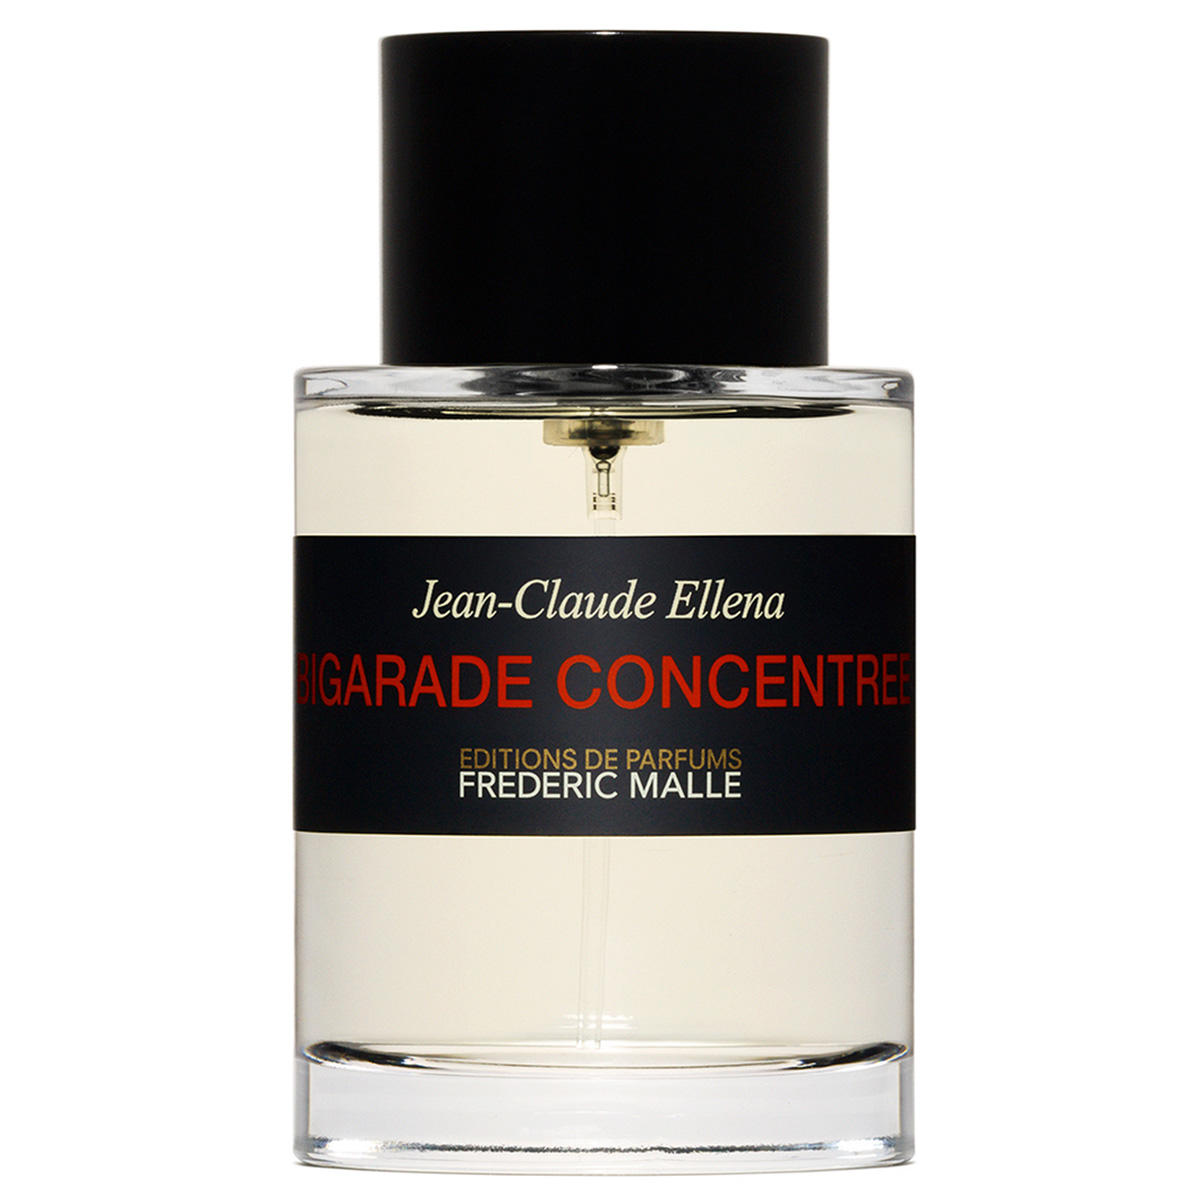 editions de parfums frederic malle bigarade concentree eau de cologne 100 ml